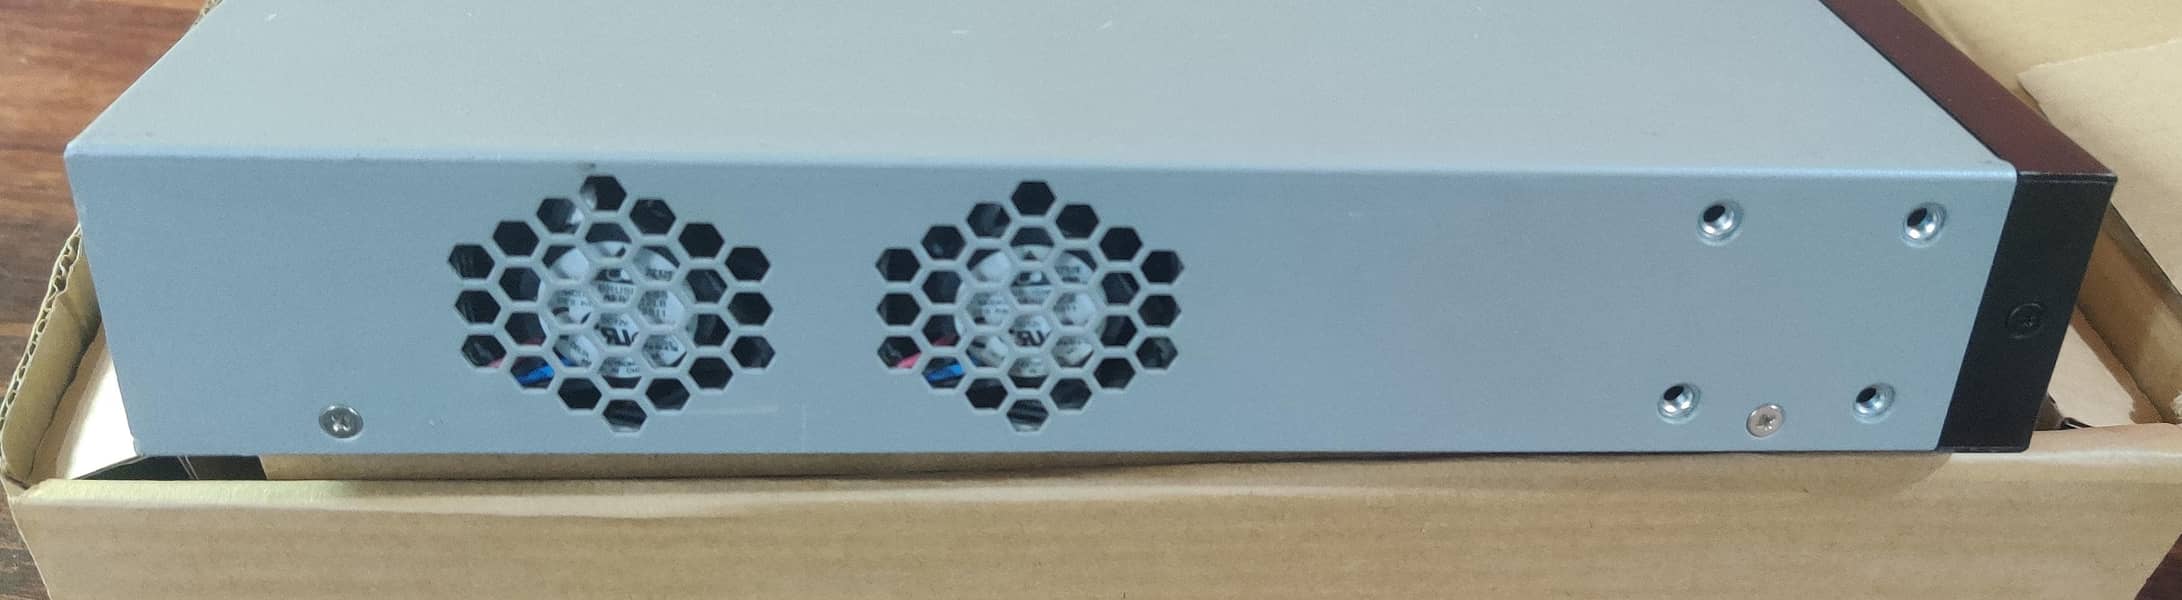 Cisco SG500-52 52-Ports Gigabit Manageable Switch (Open Box) 15